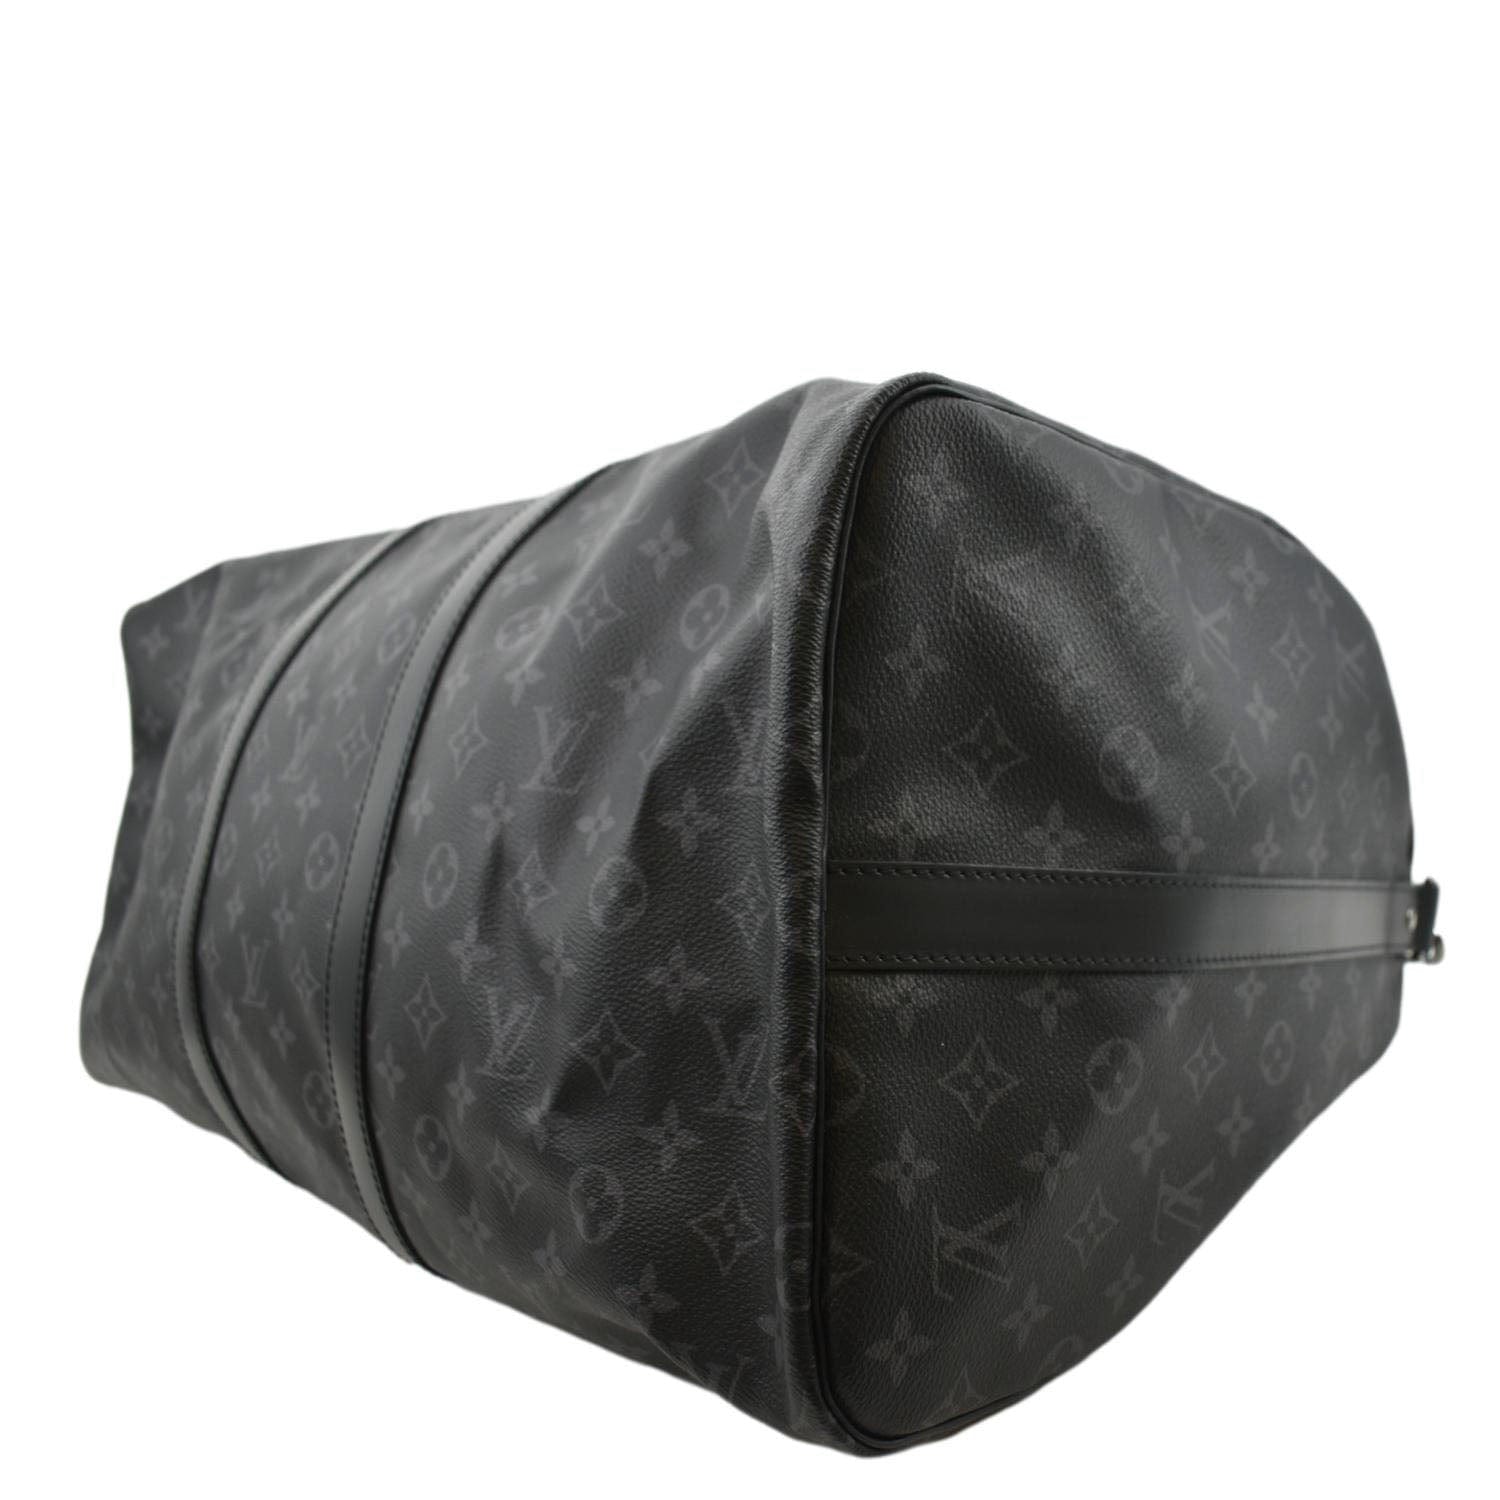 Louis Vuitton Keepall Bandoulière 55 Travel Bag